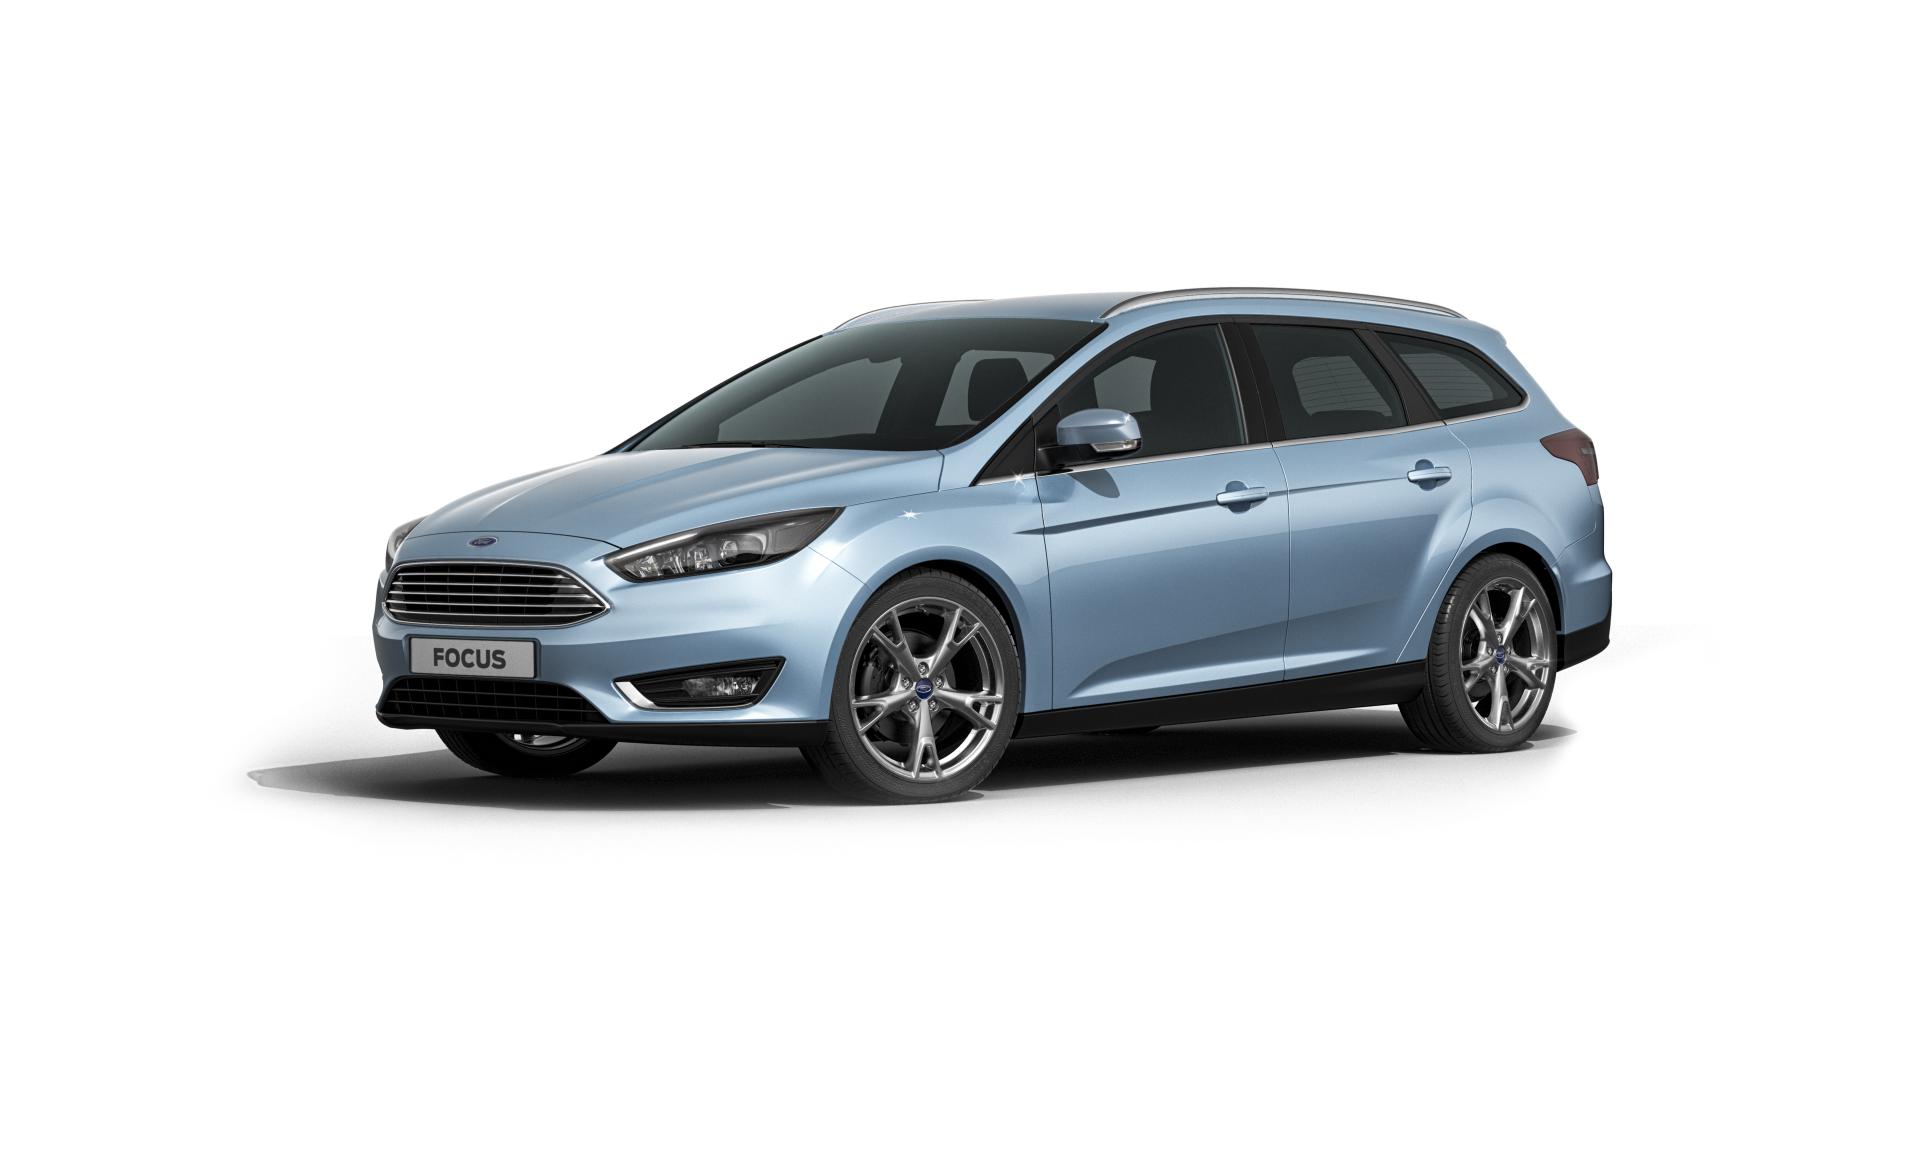 2015 Ford Focus Wagon HD wallpapers, Desktop wallpaper - most viewed